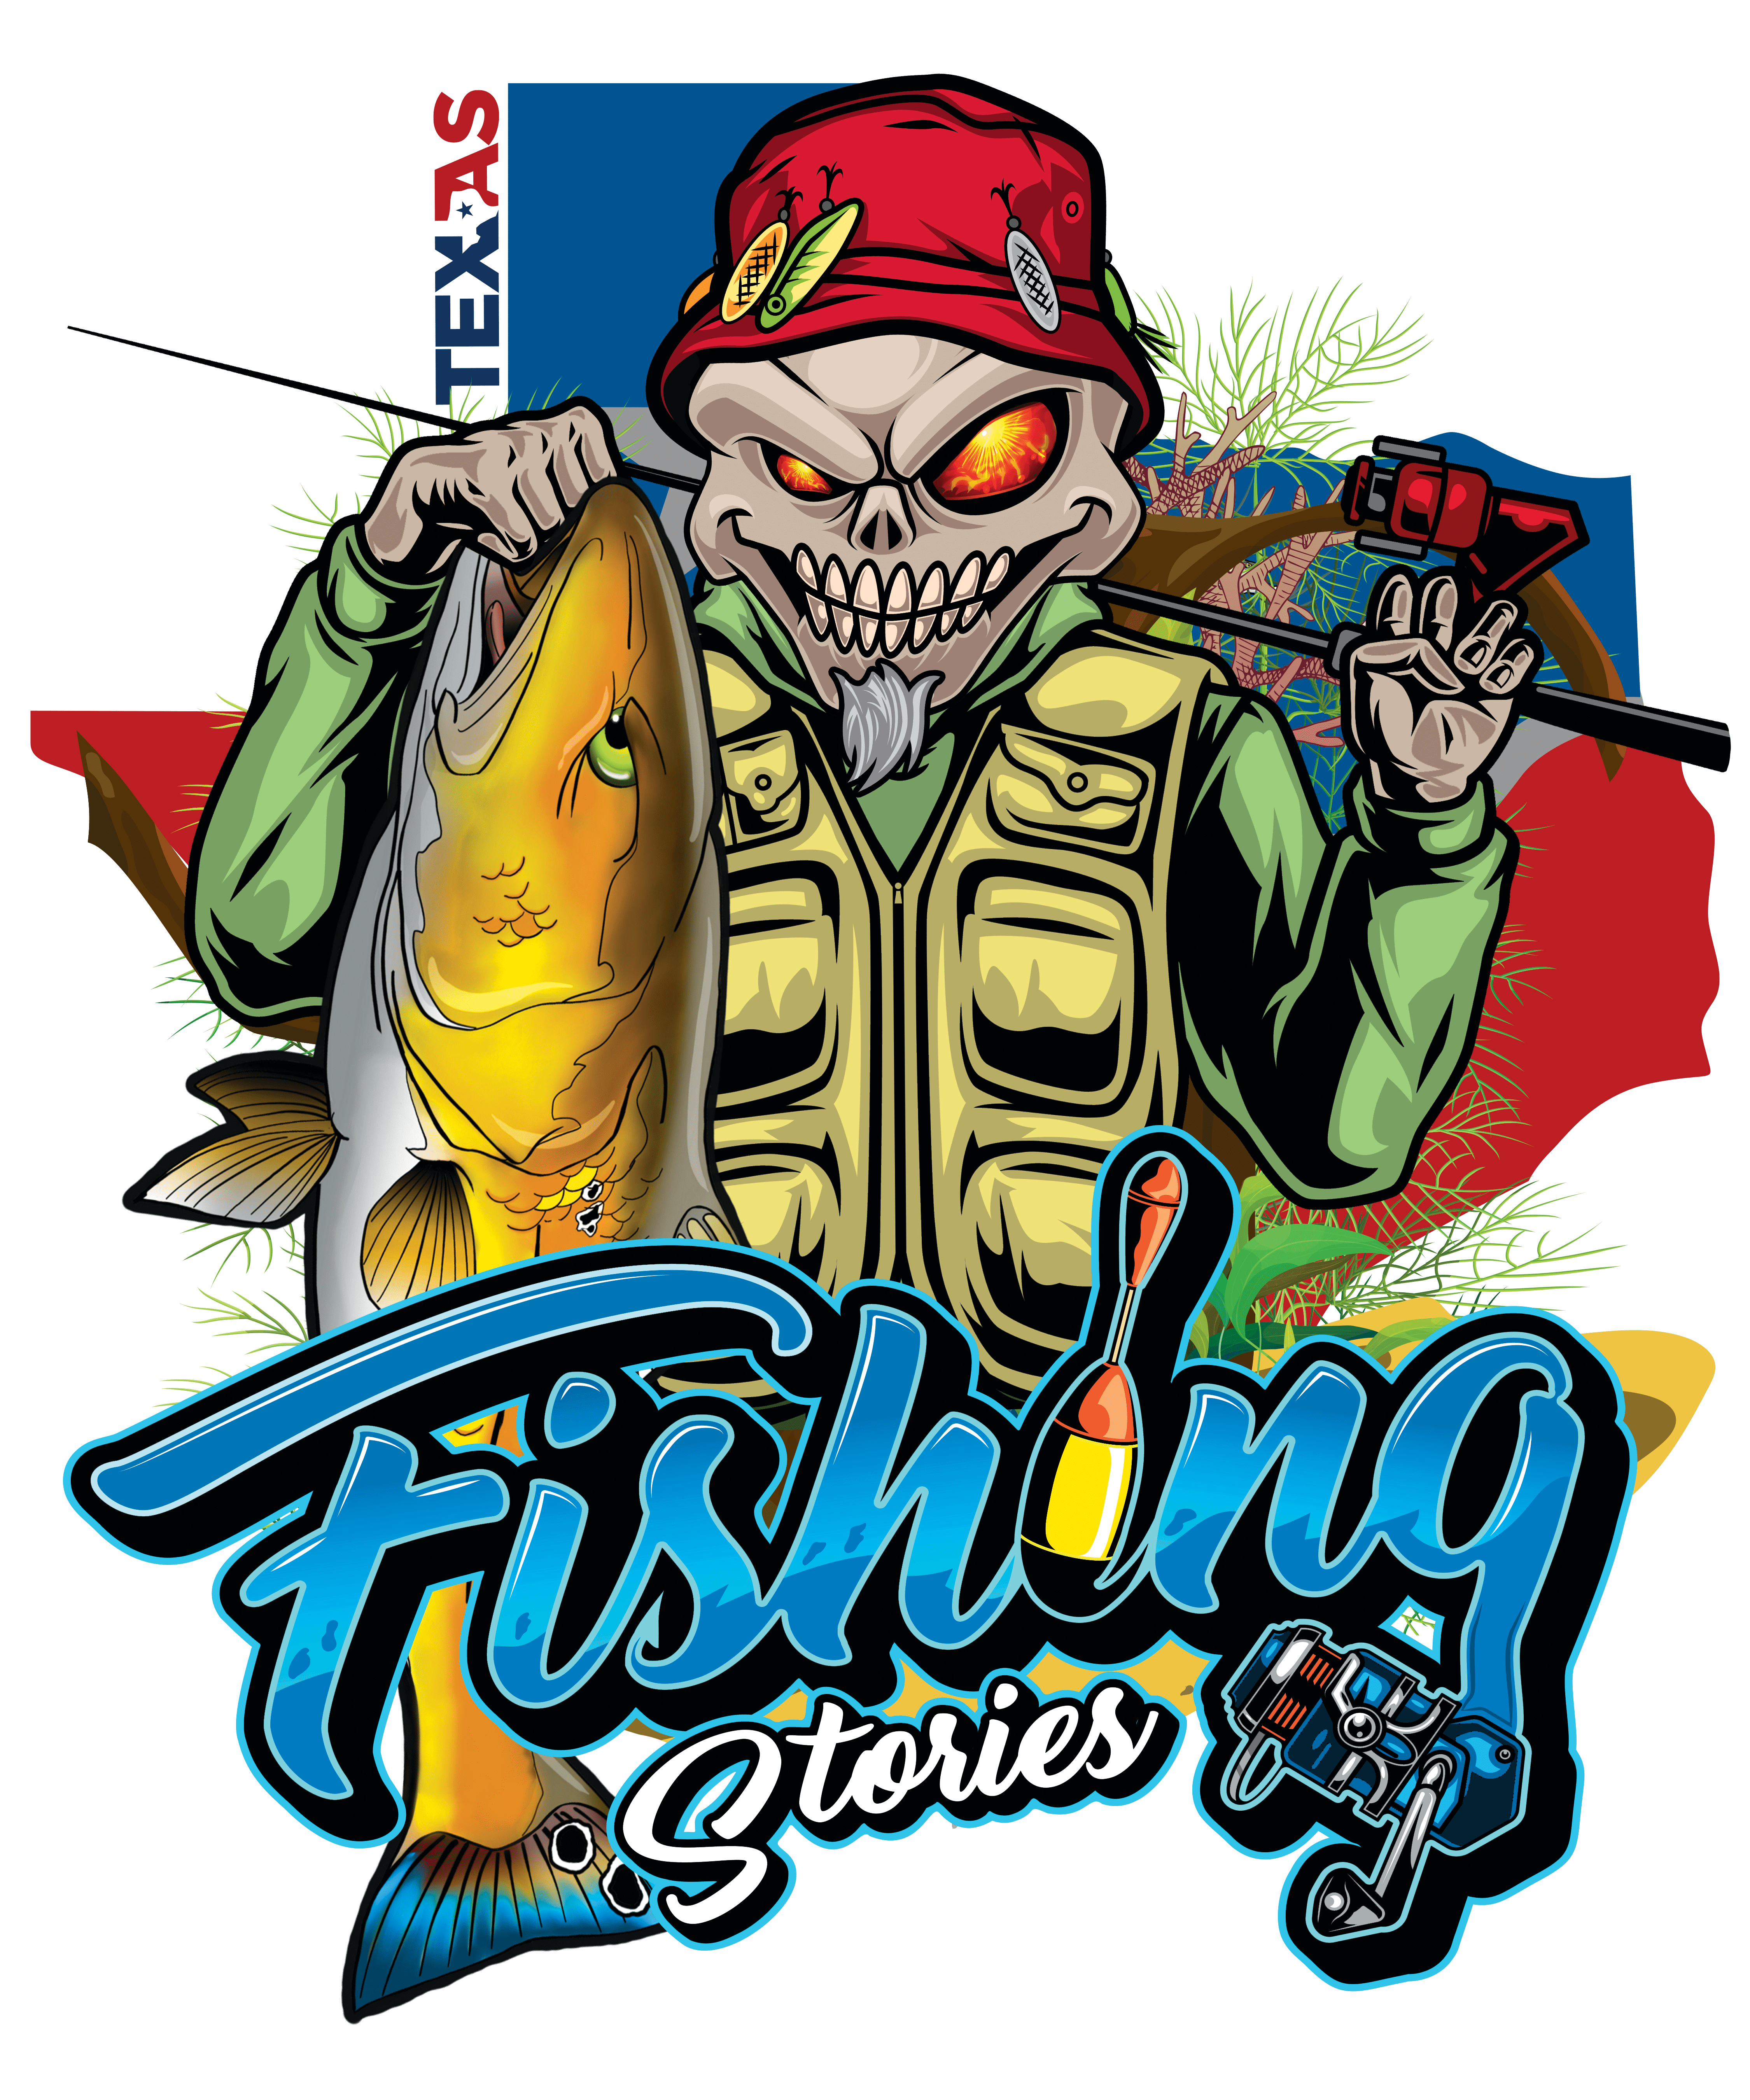 https://saltdevils.com/wp-content/uploads/2022/08/texas-fishing-stories.png